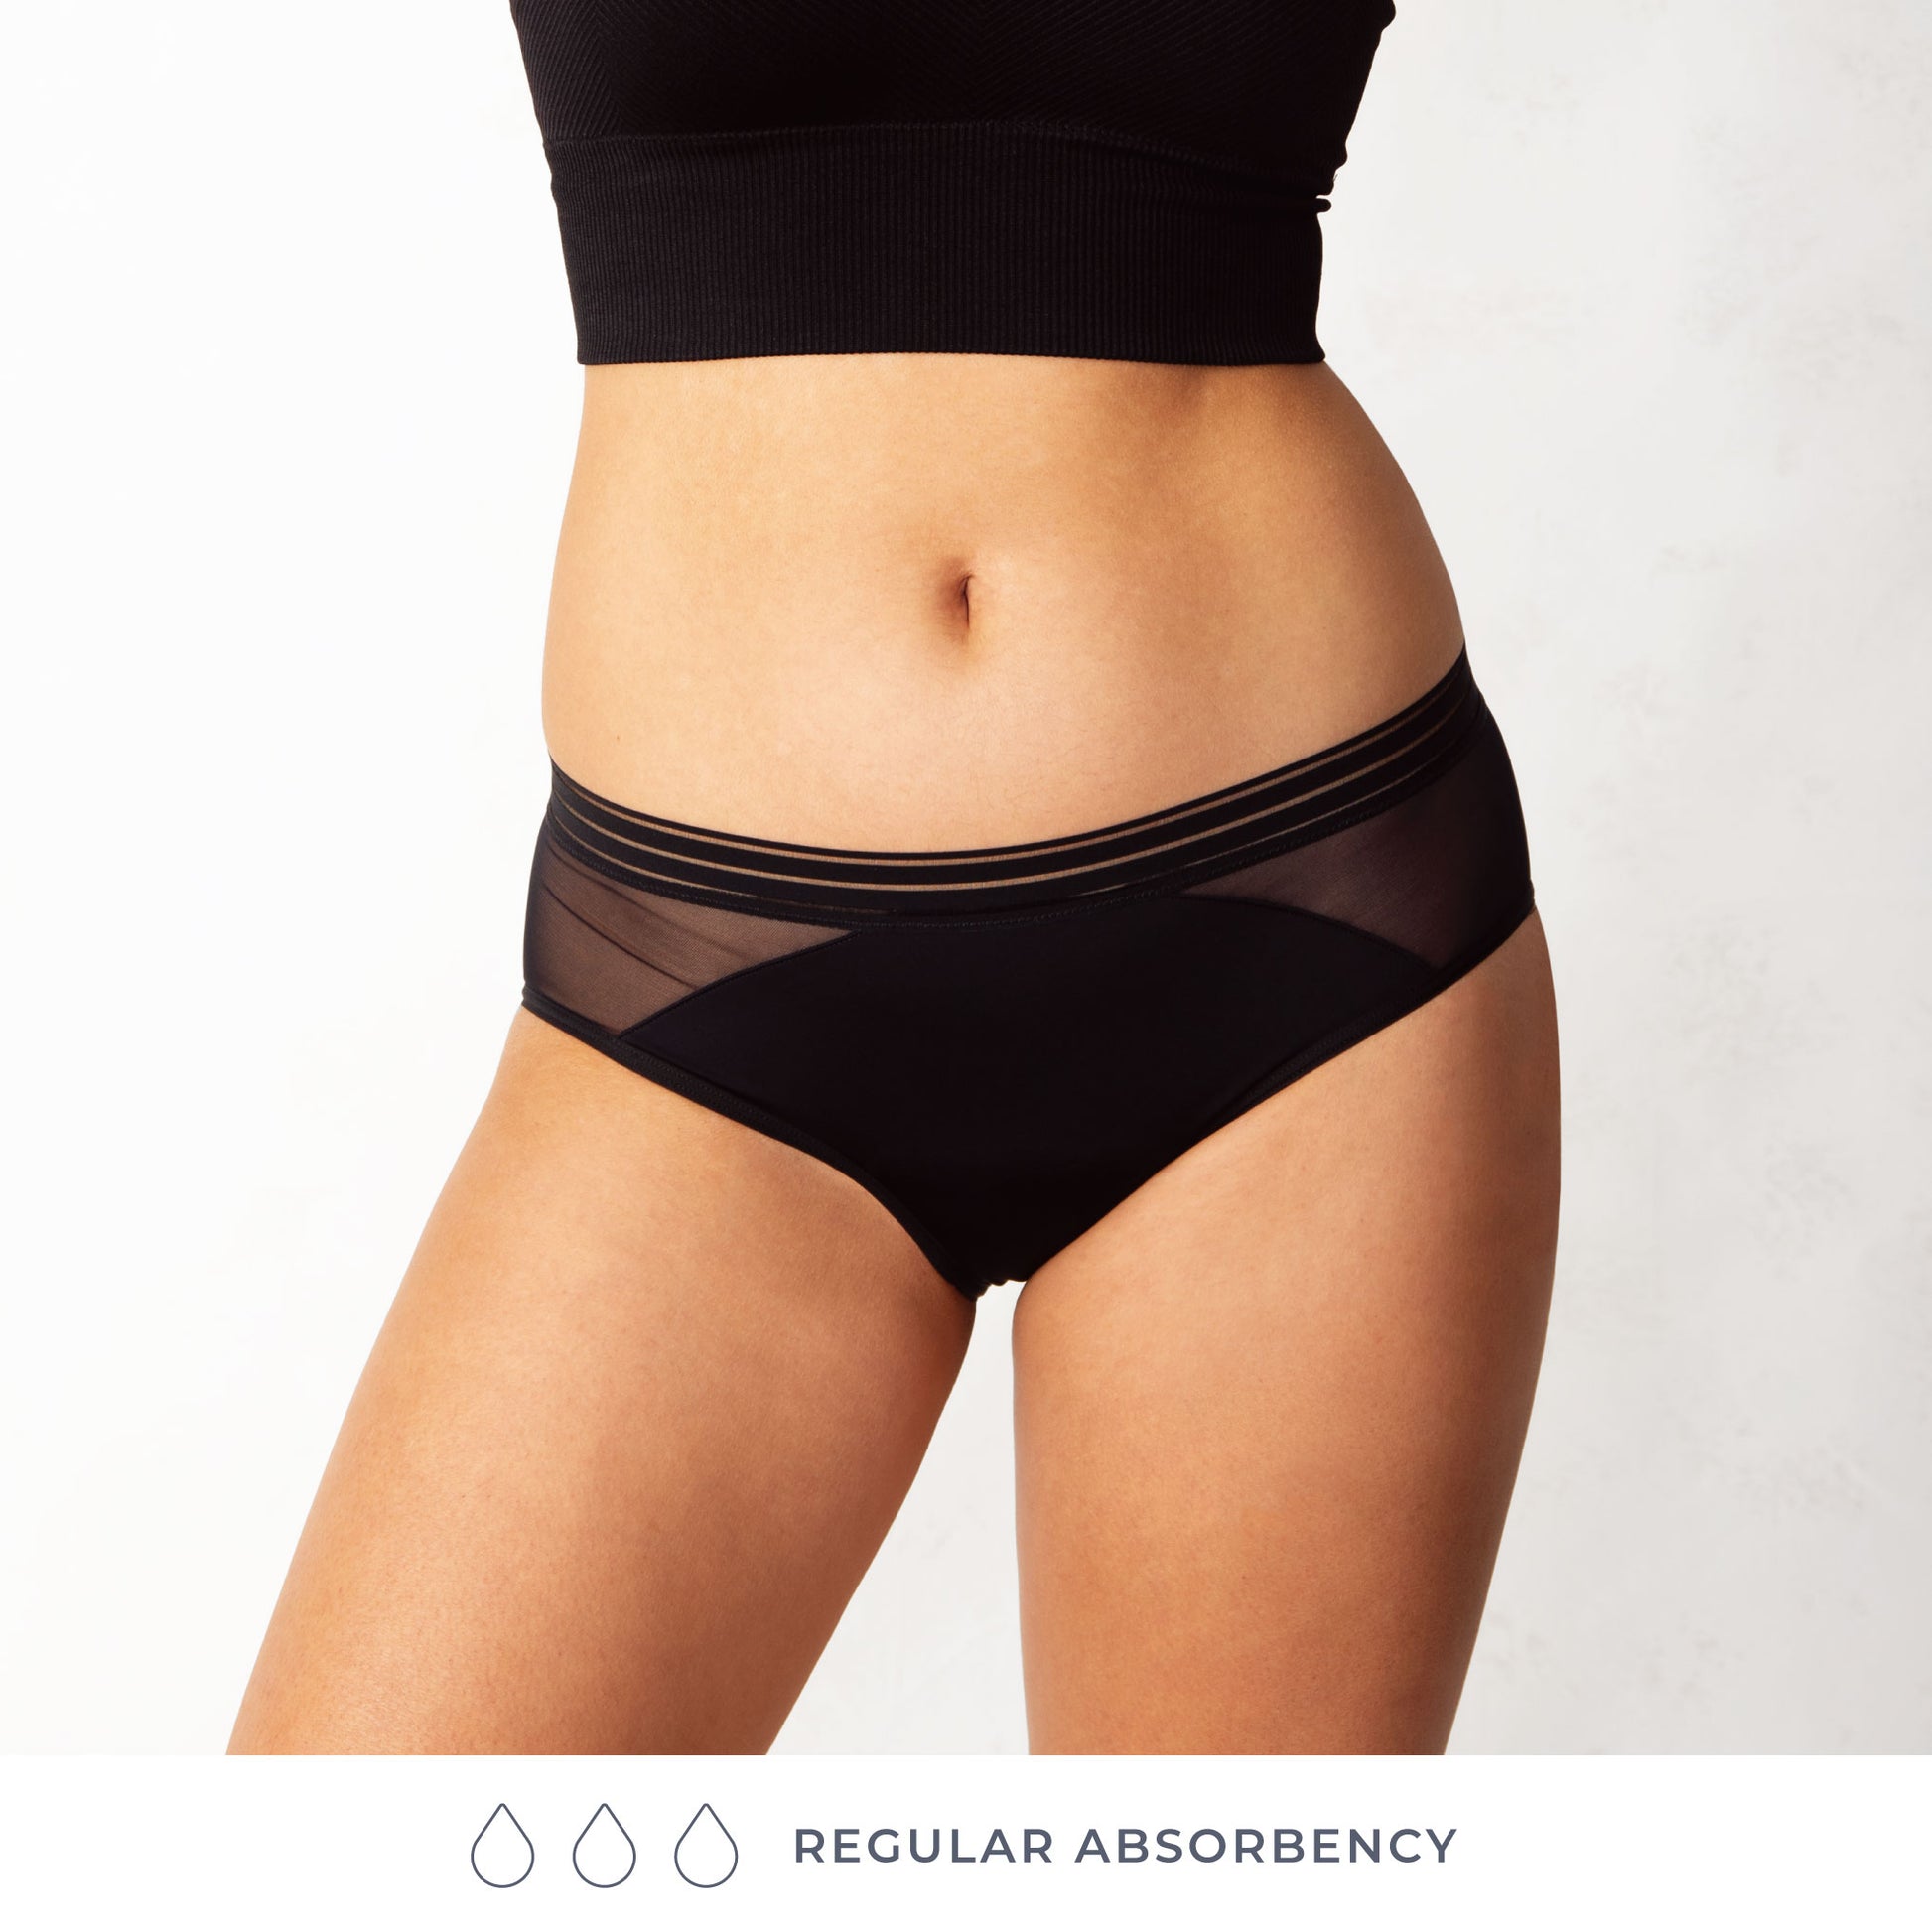  Saalt Reusable Period Underwear - Comfortable, Thin